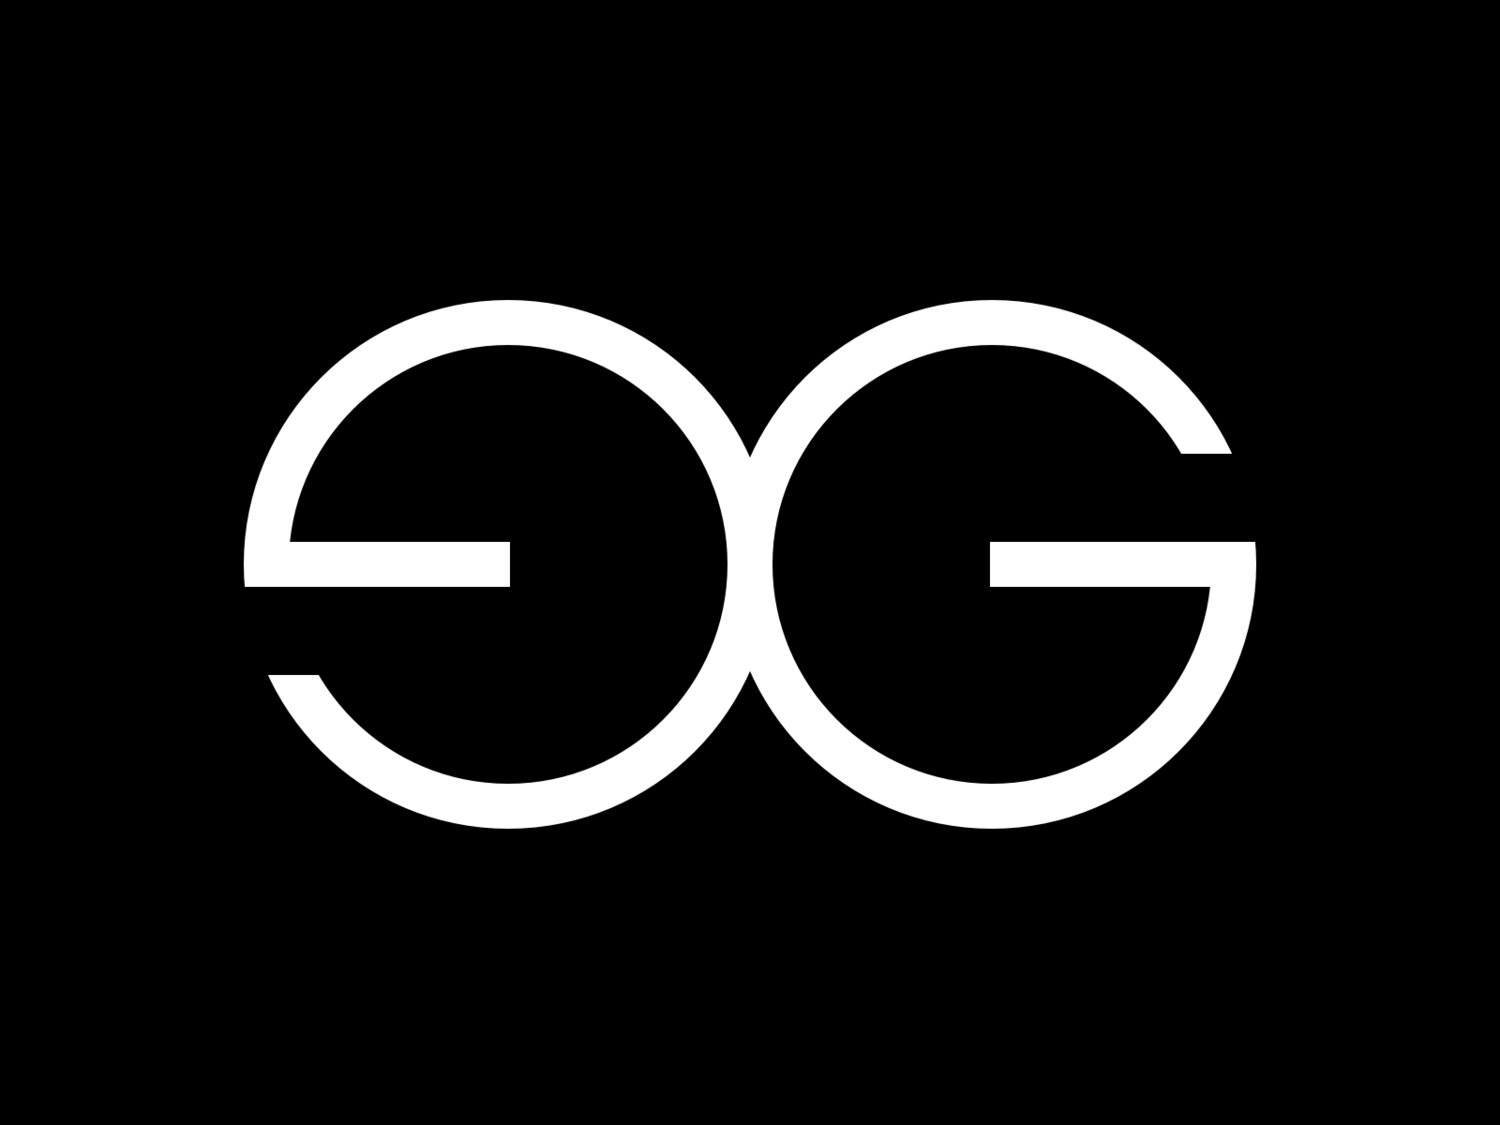 Gg script. Gg лого. Gg. Аватарка gg. Логотип с двумя gg.